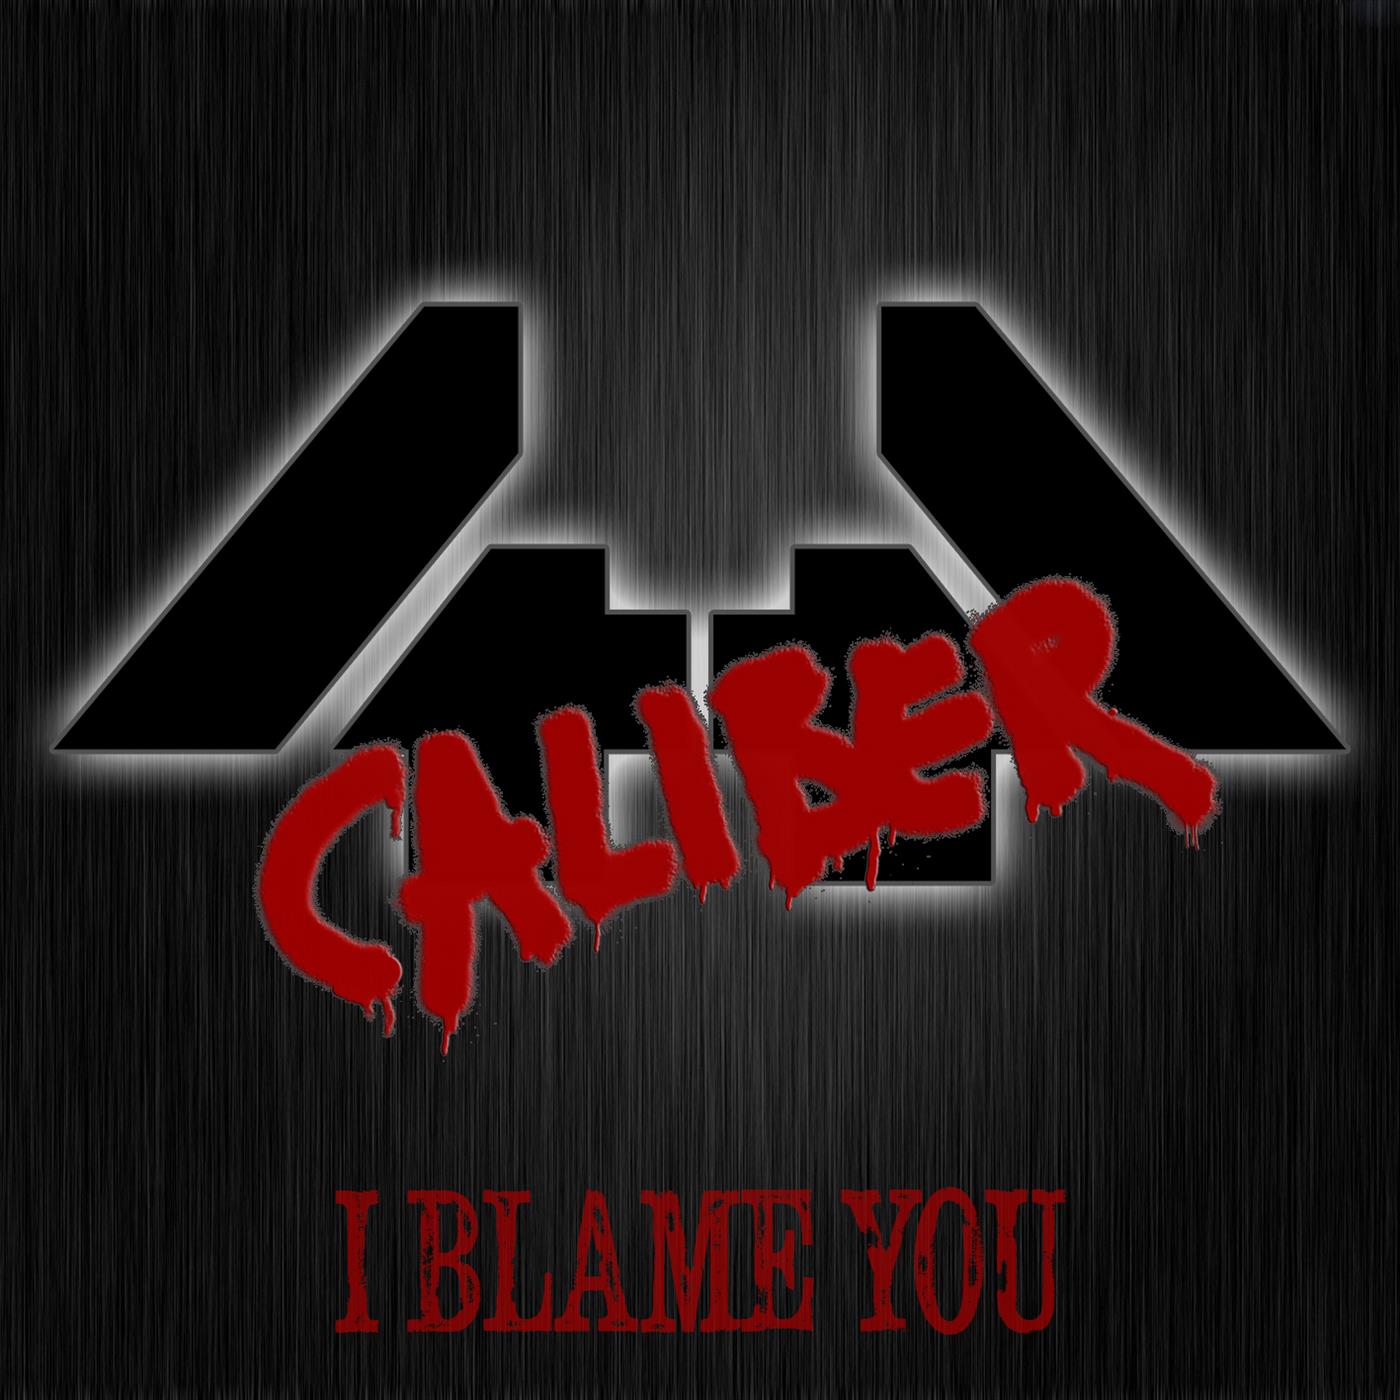 I Blame You